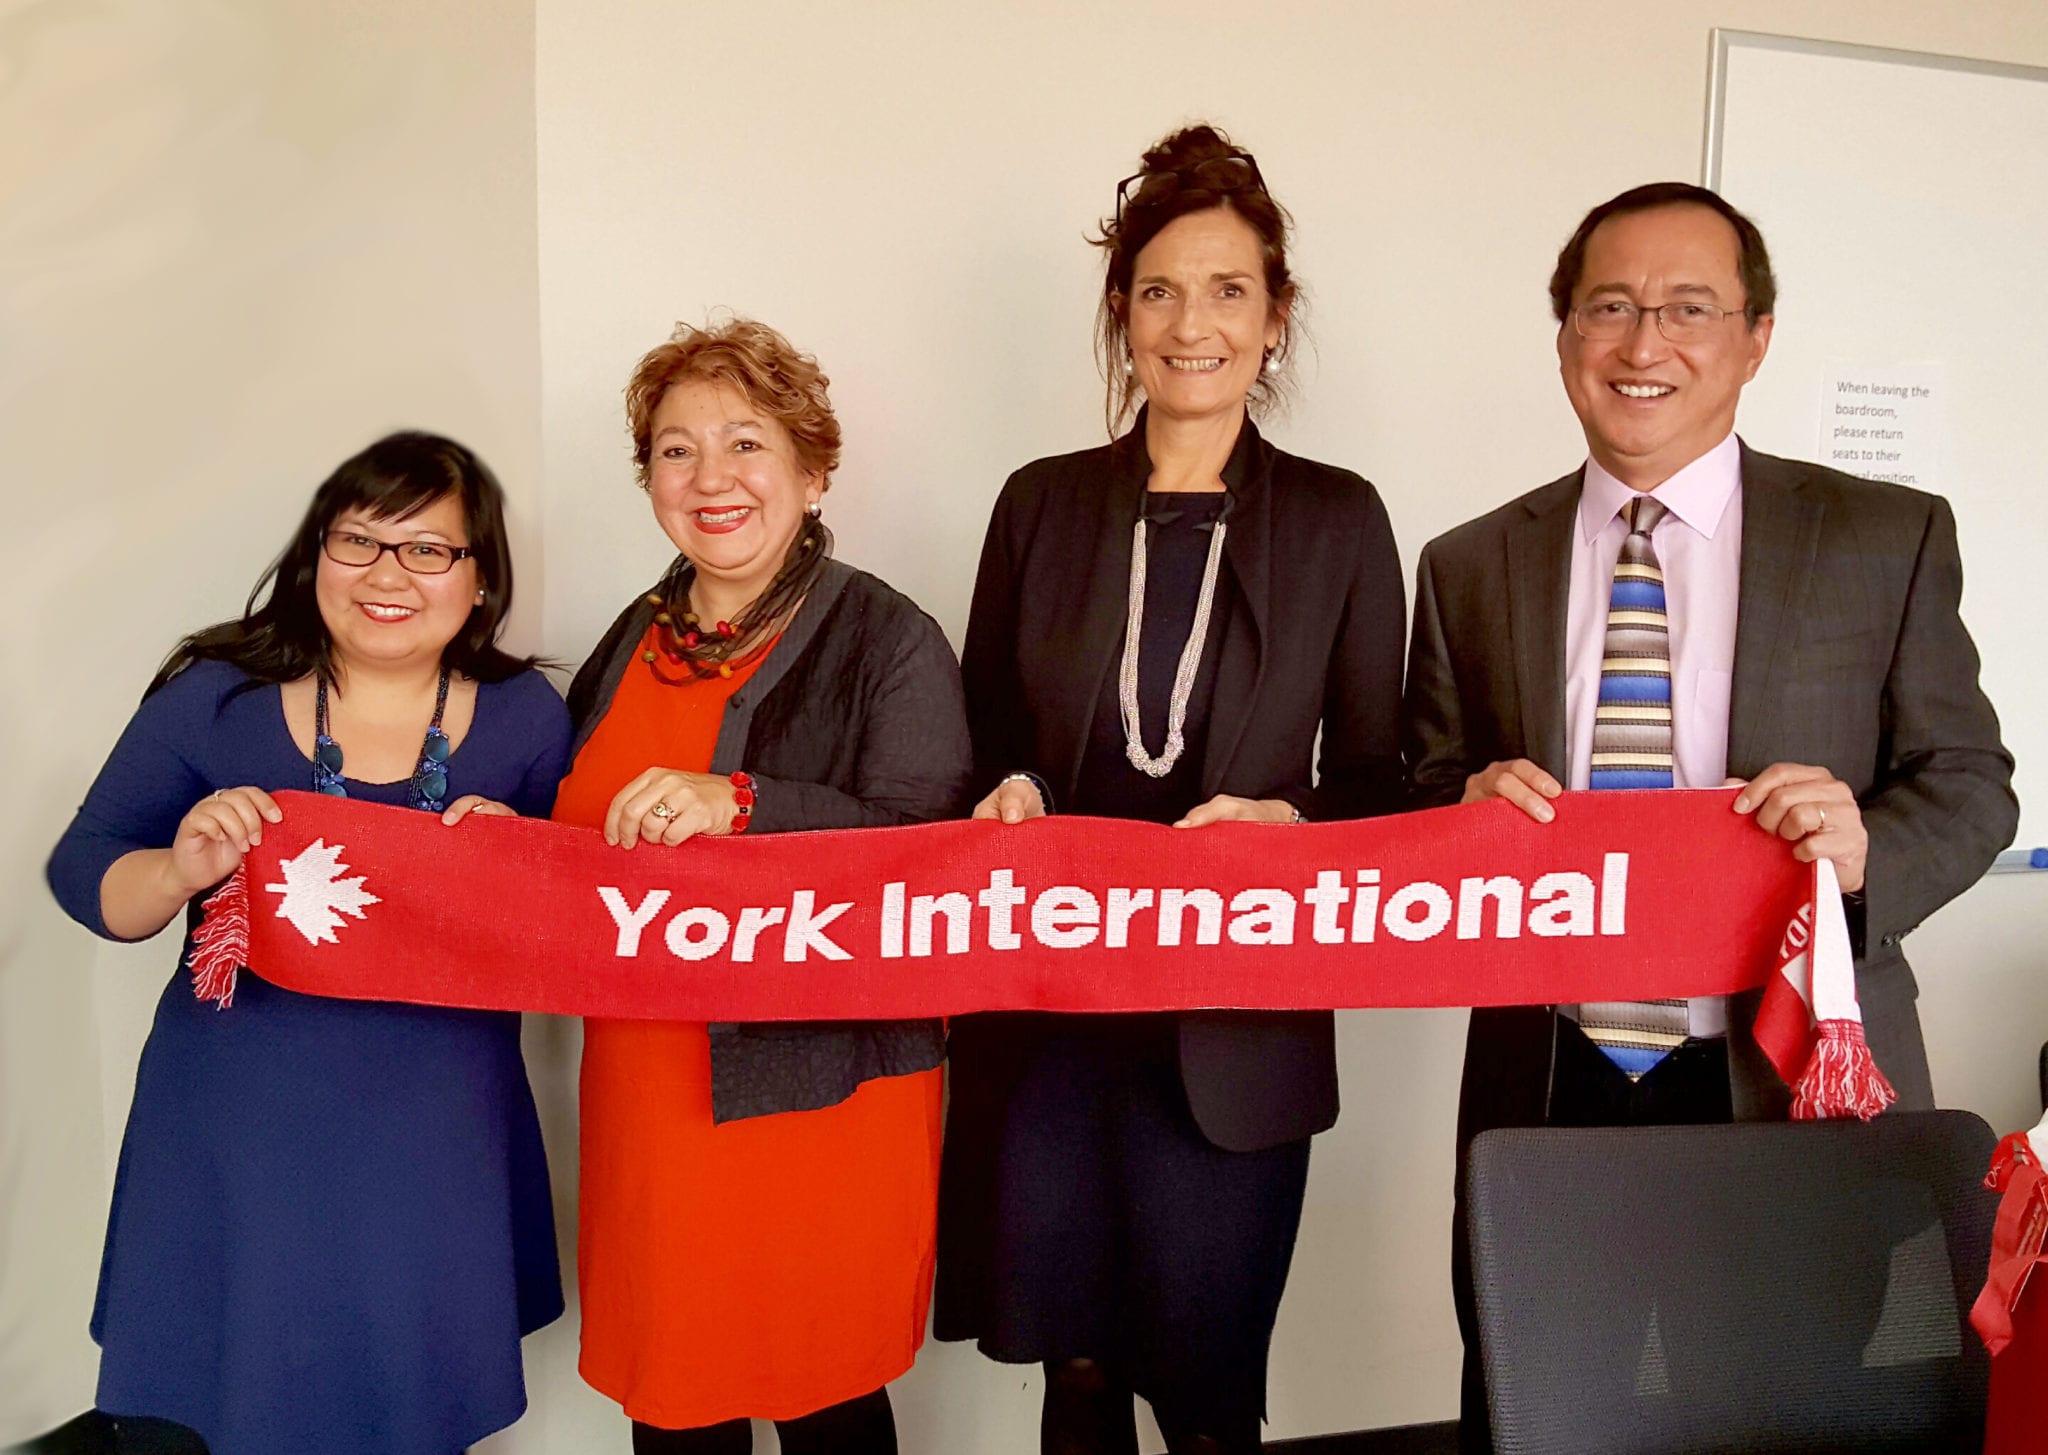 York International, School of Administrative Studies and ZHAW School Of Management and Law, Switzerland, Nov 2016